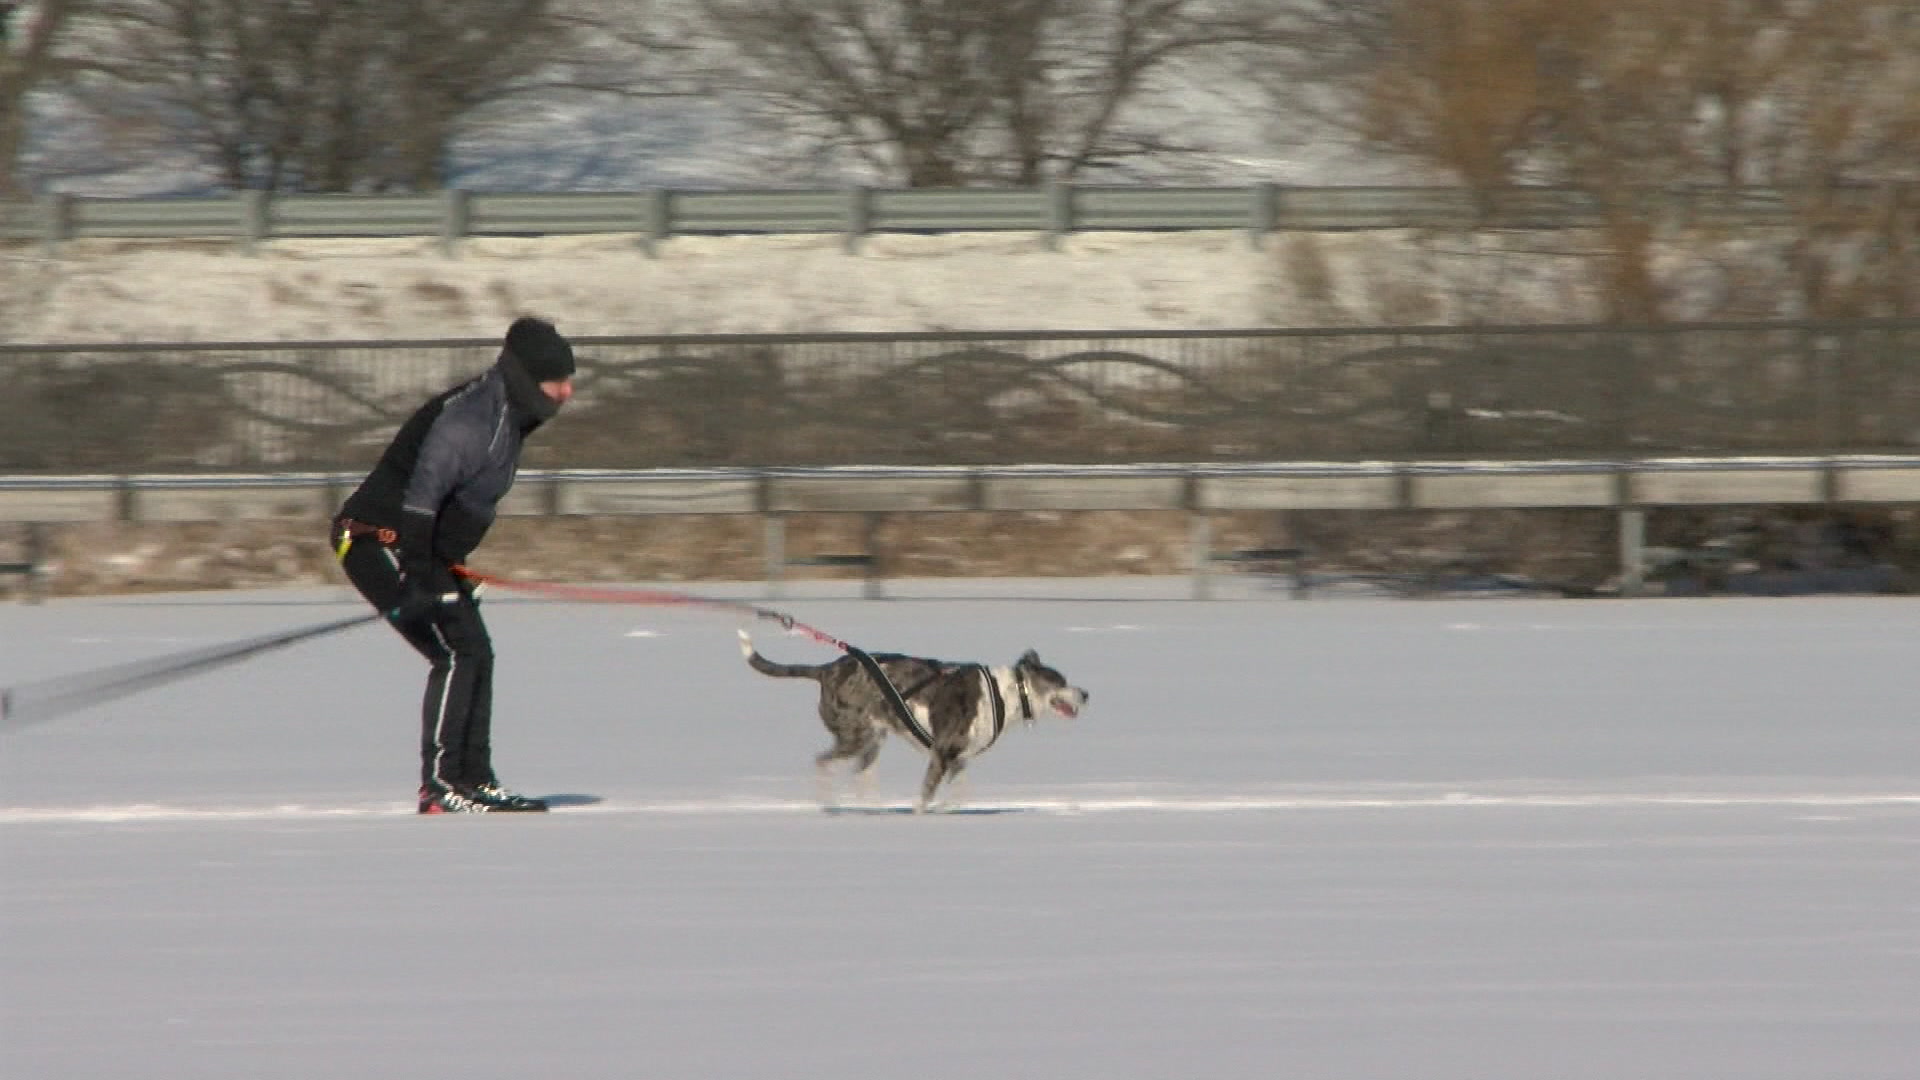 How Skijoring Became So Popular In Minnesota